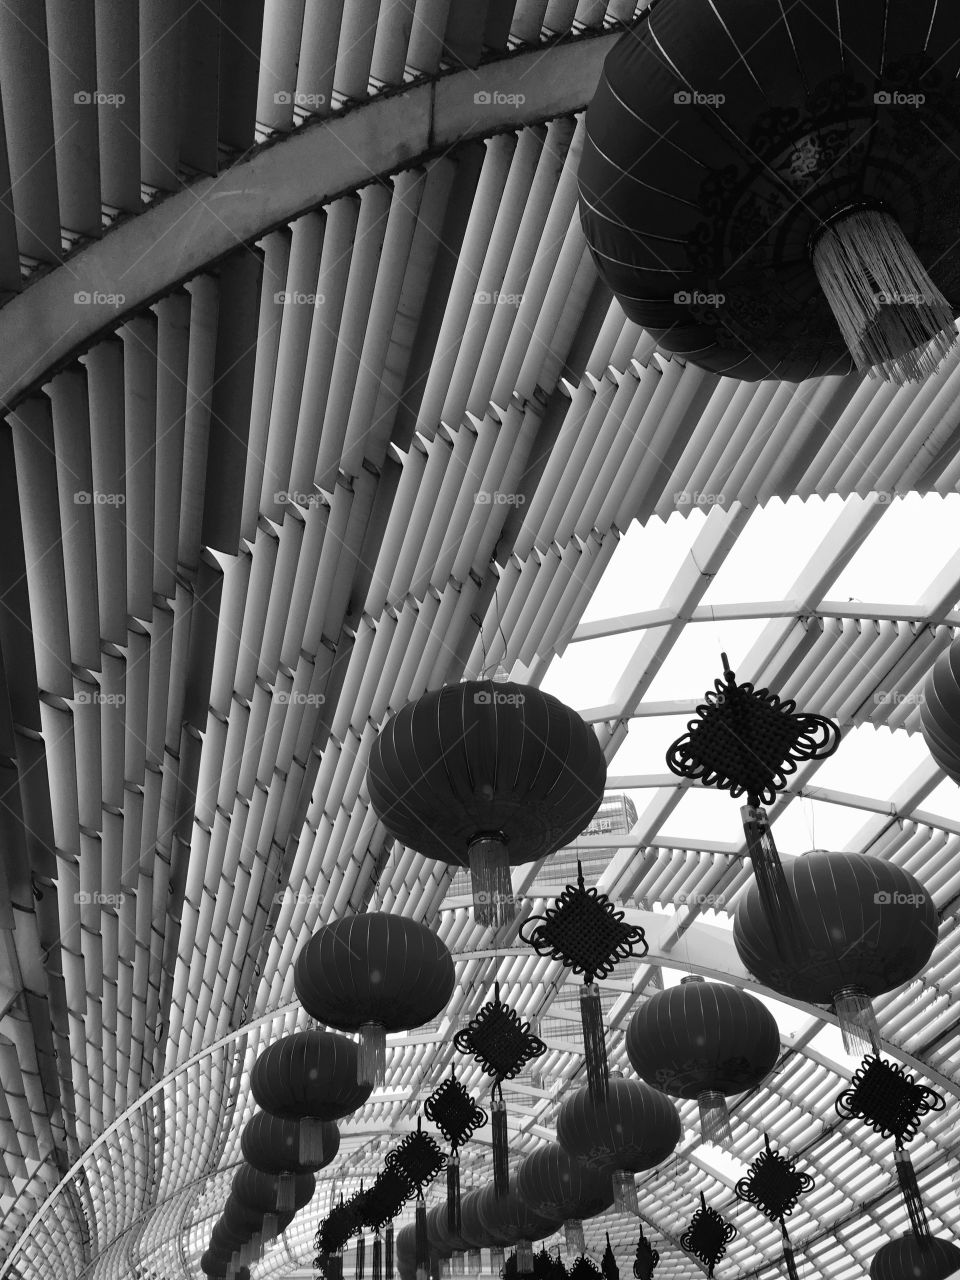 Chinese Hanging Lanterns and Chinese Knots in Shenzhen, China